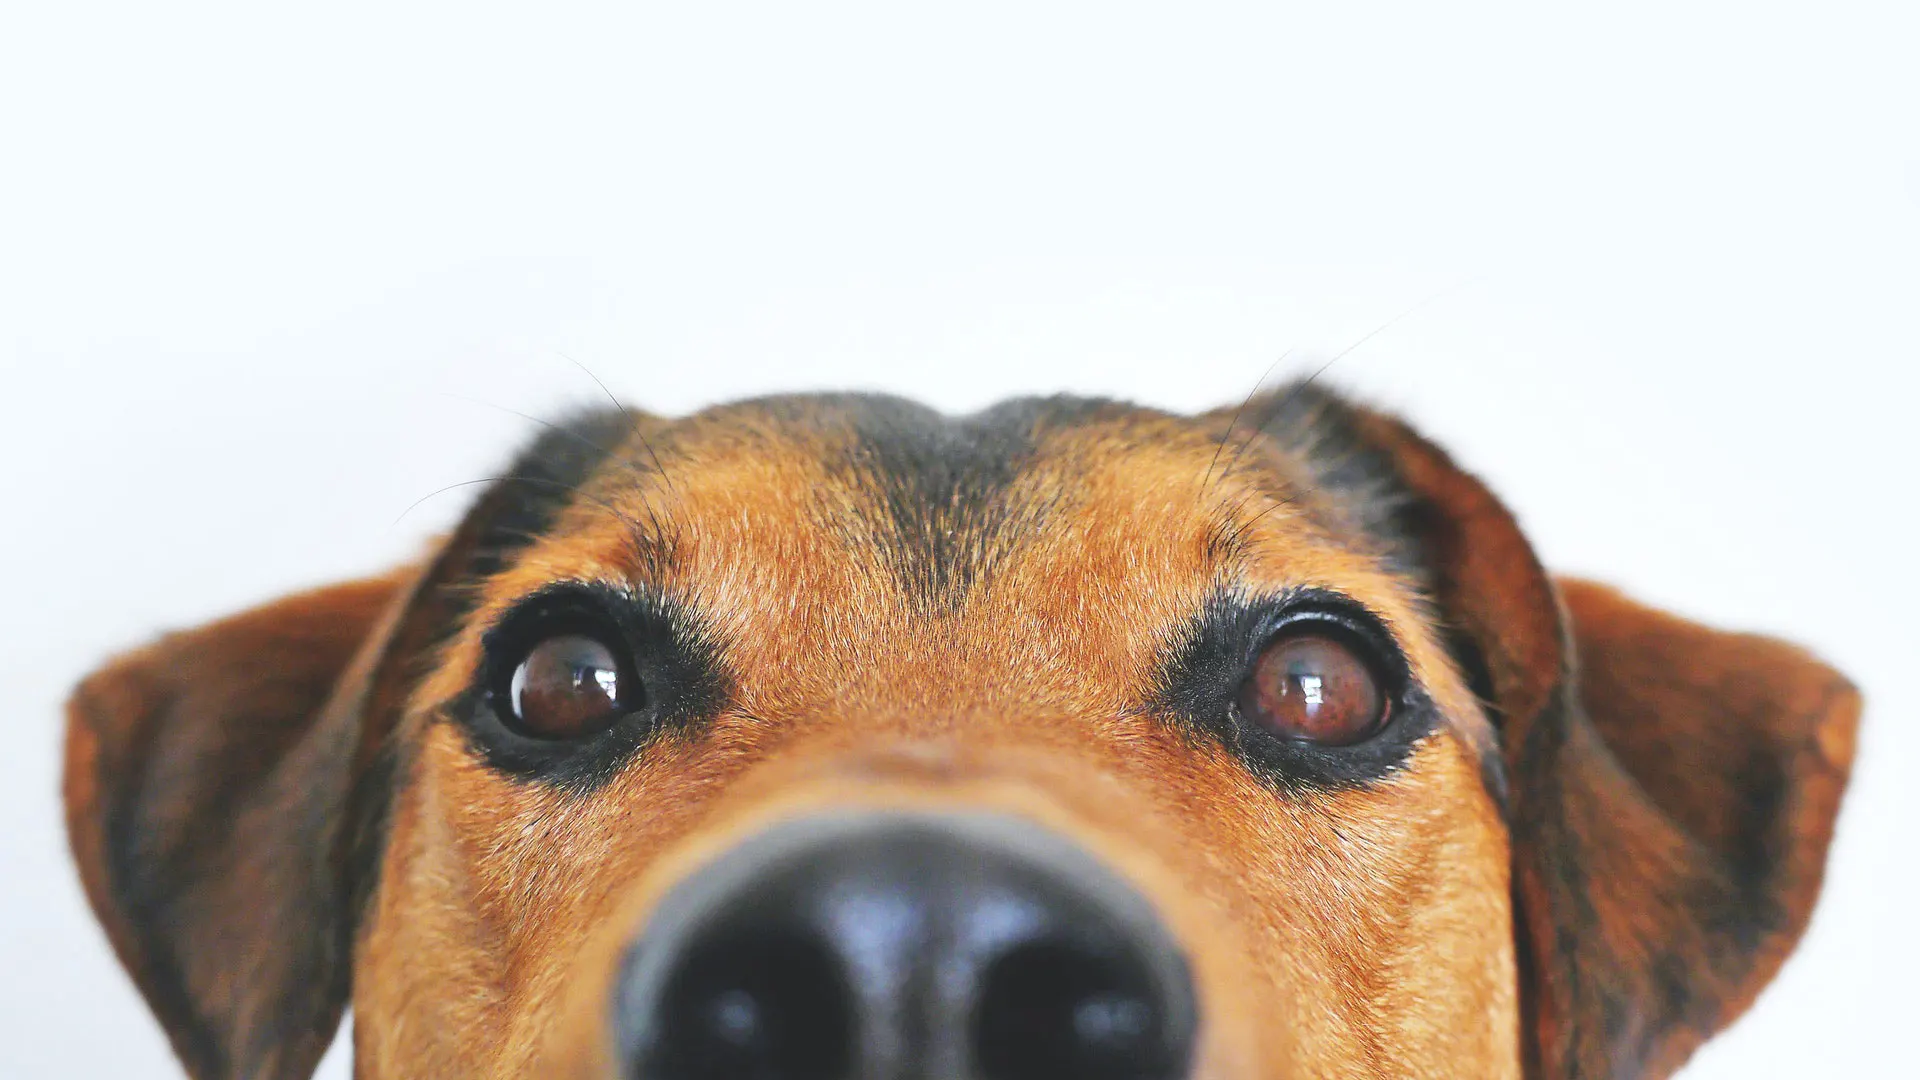 dog nose close up